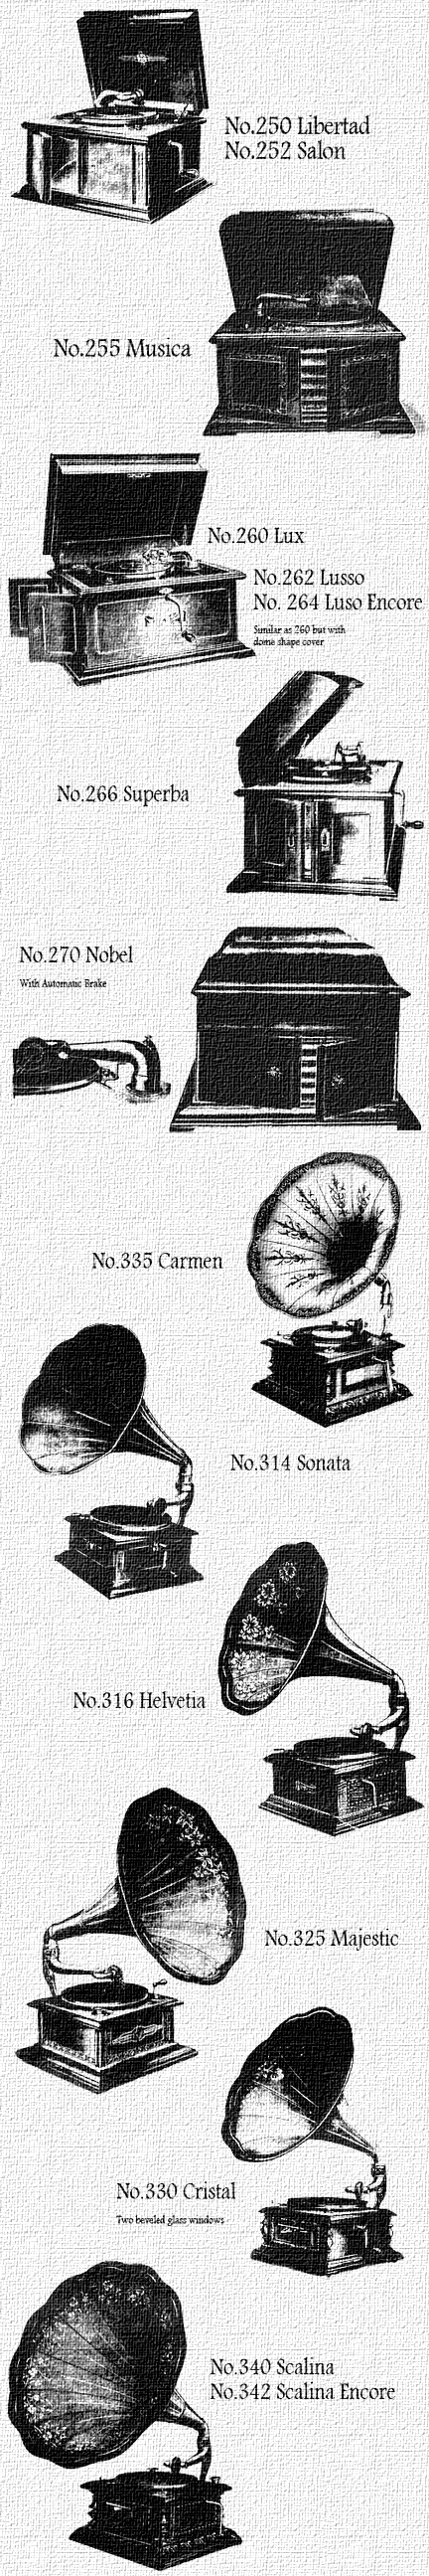 THORENS PHONOGRAPHS 1914